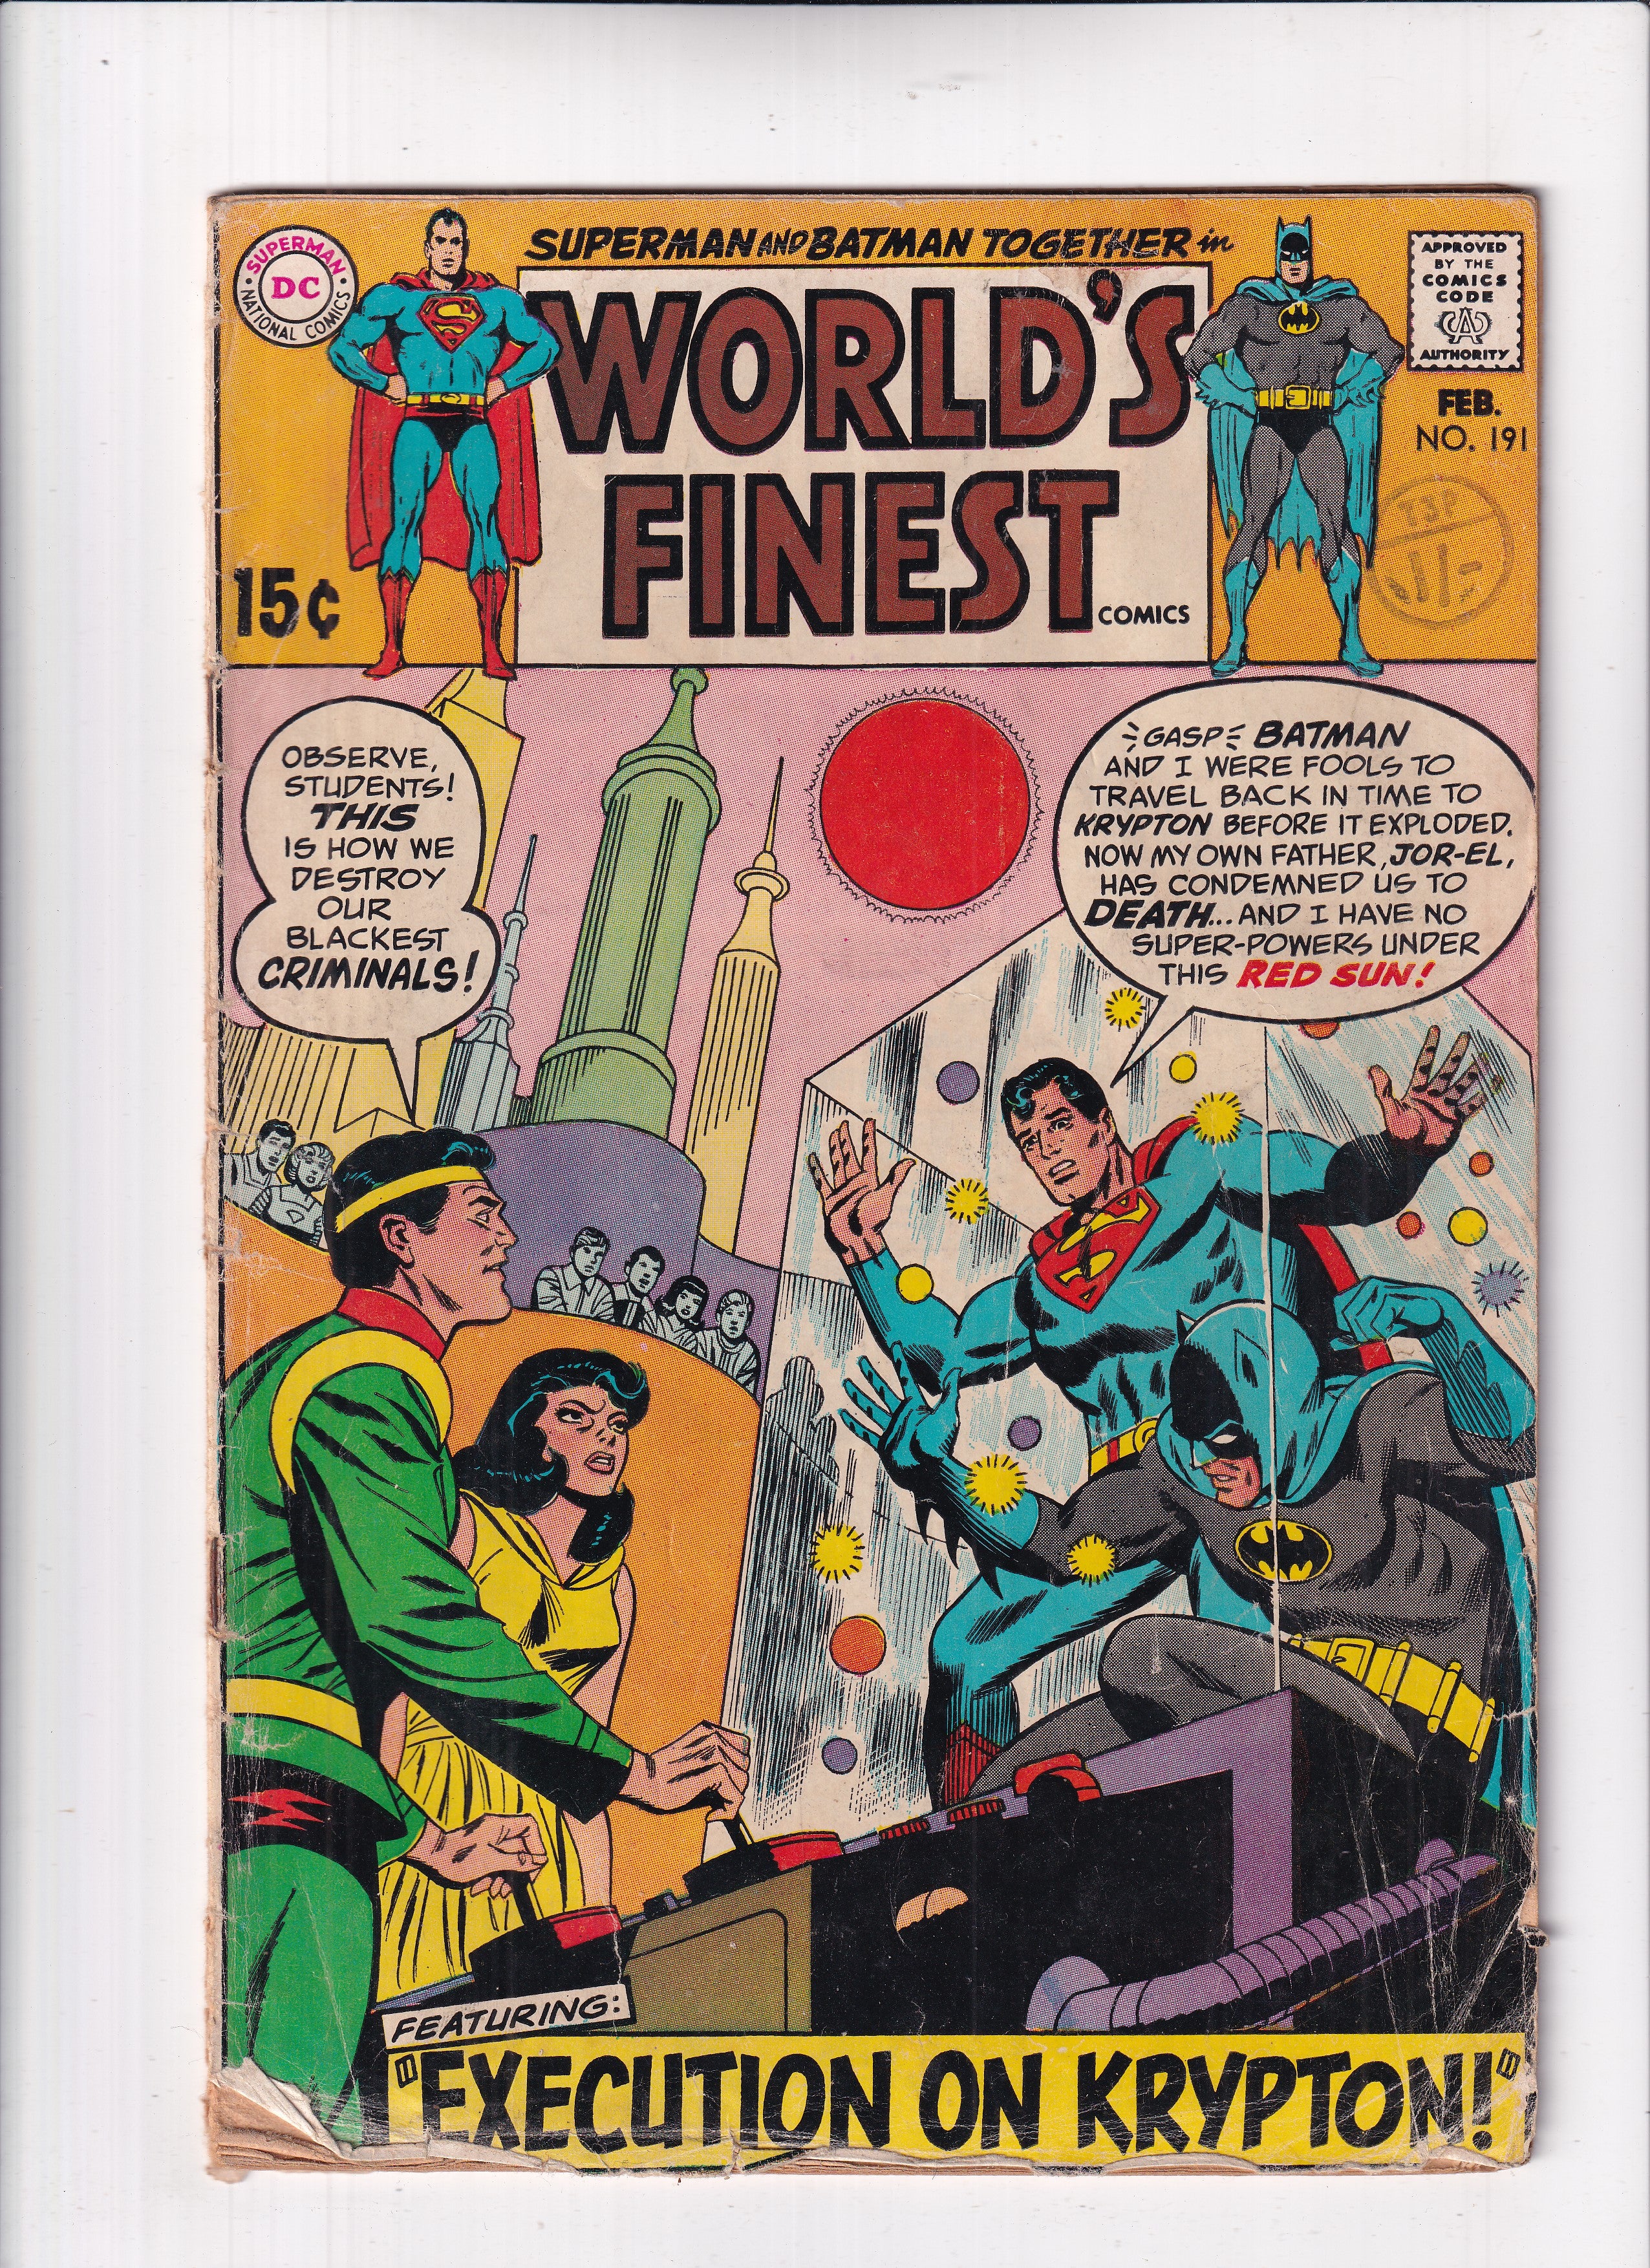 WORLD'S FINEST #191 - Slab City Comics 